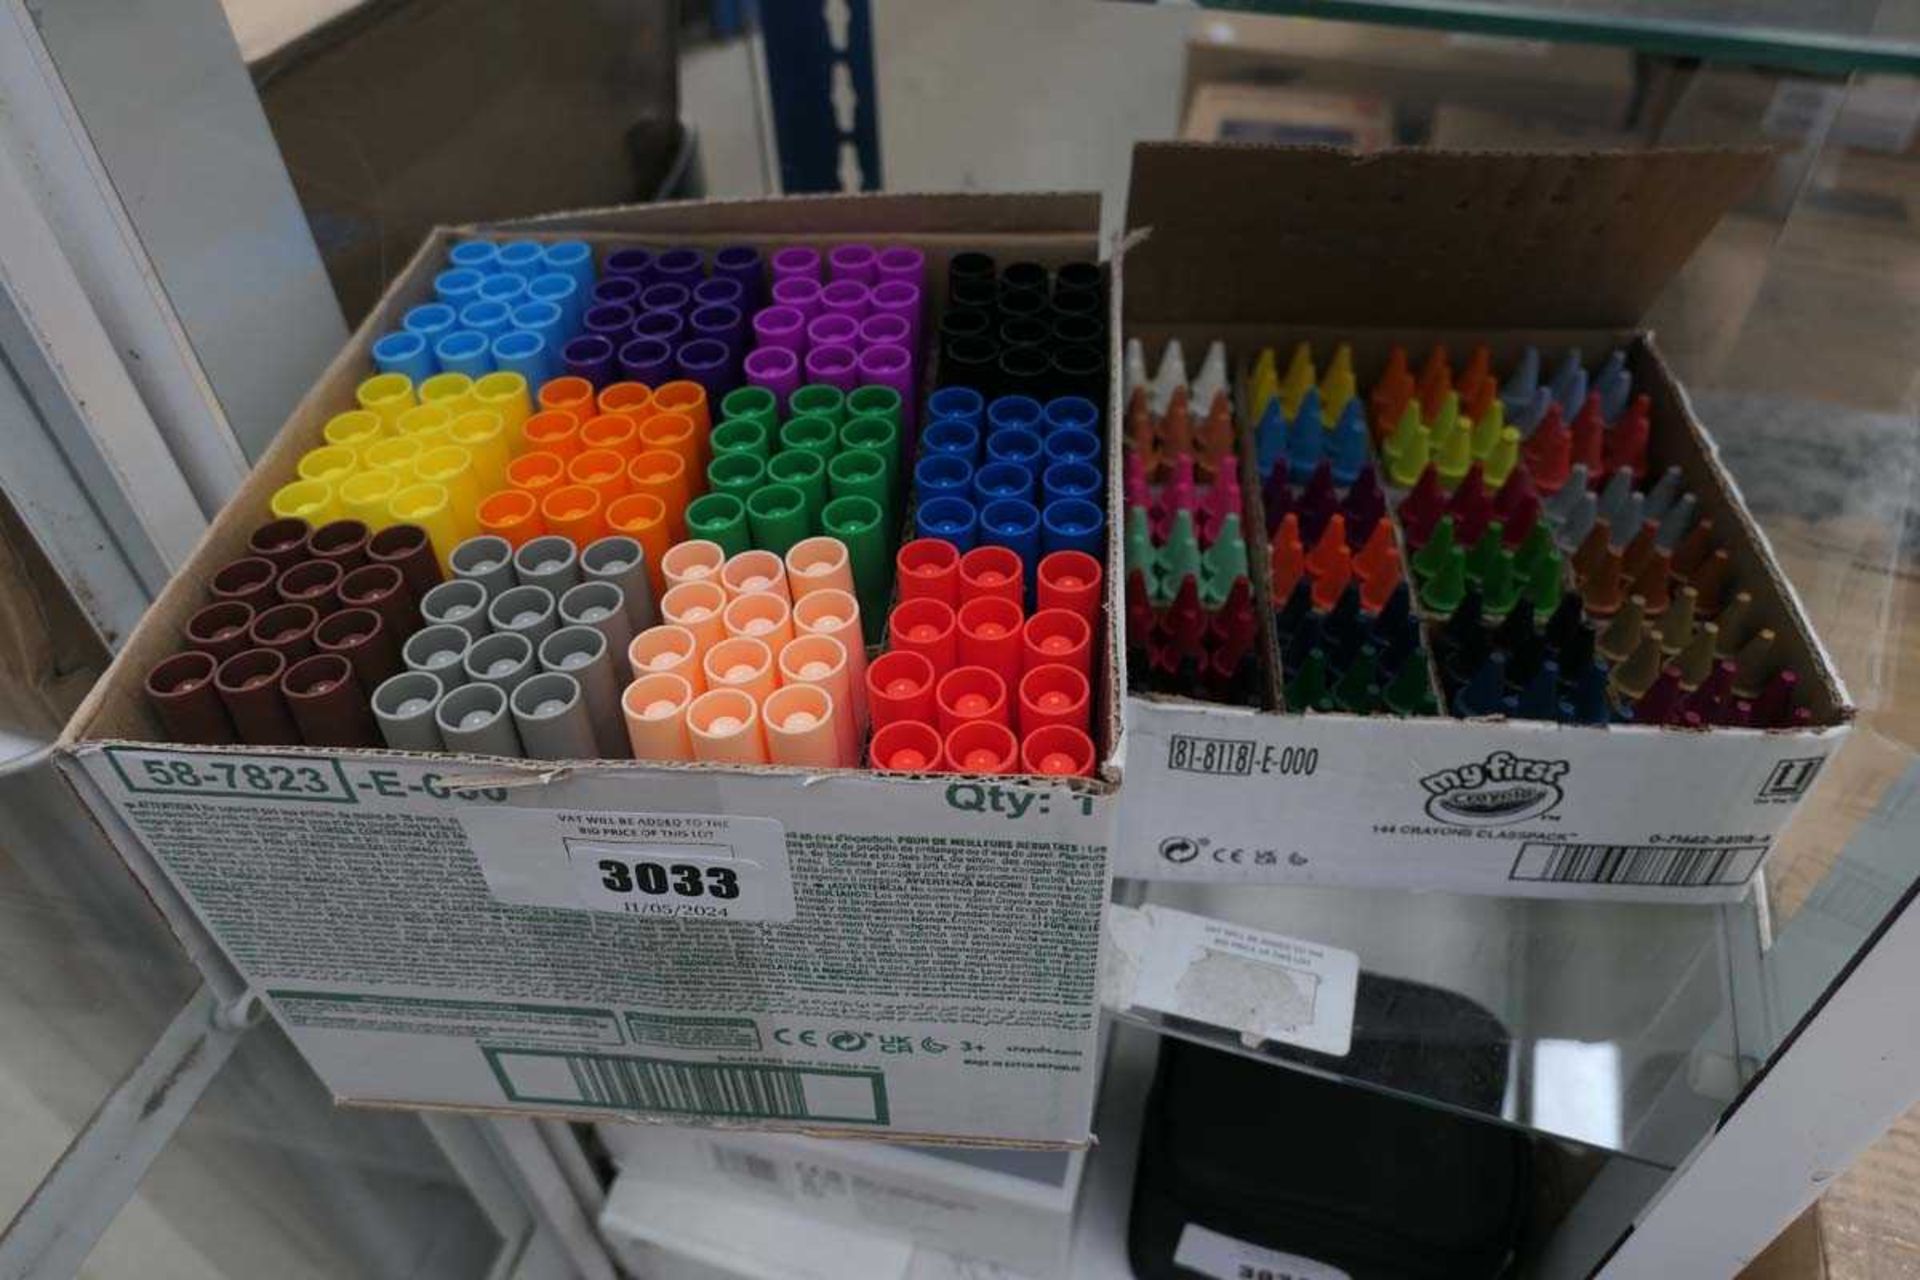 +VAT Box of Crayola crayons and felt tip pens